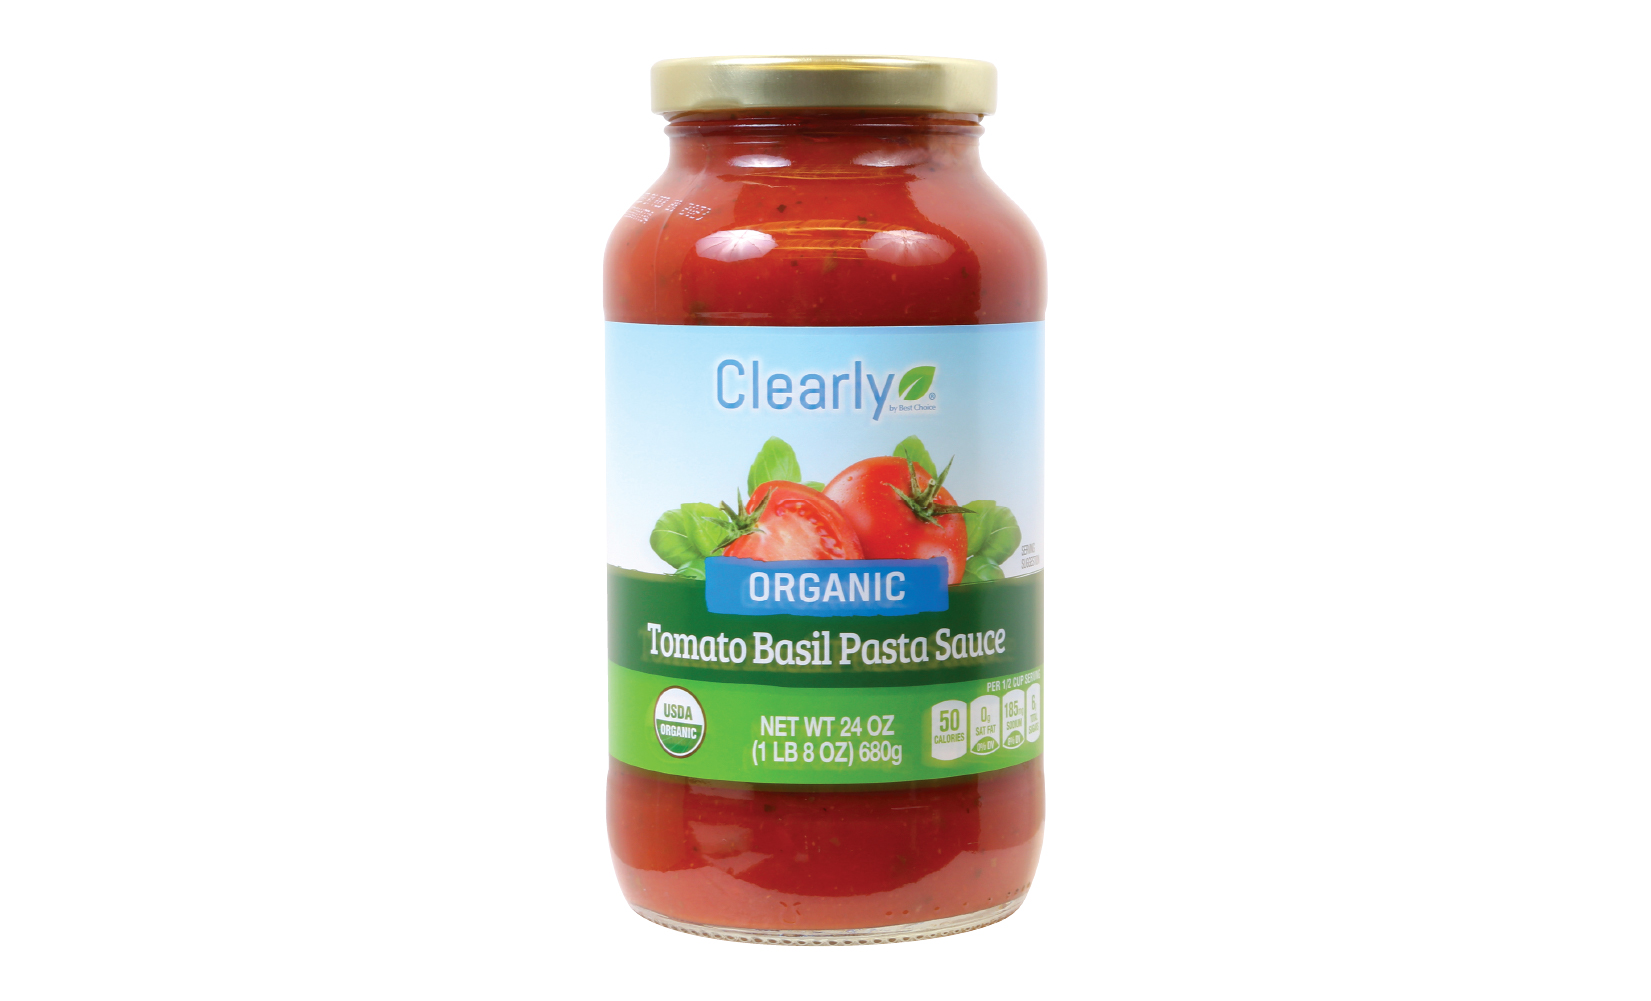 April 24 Tomato Basil Sauce Discover Product